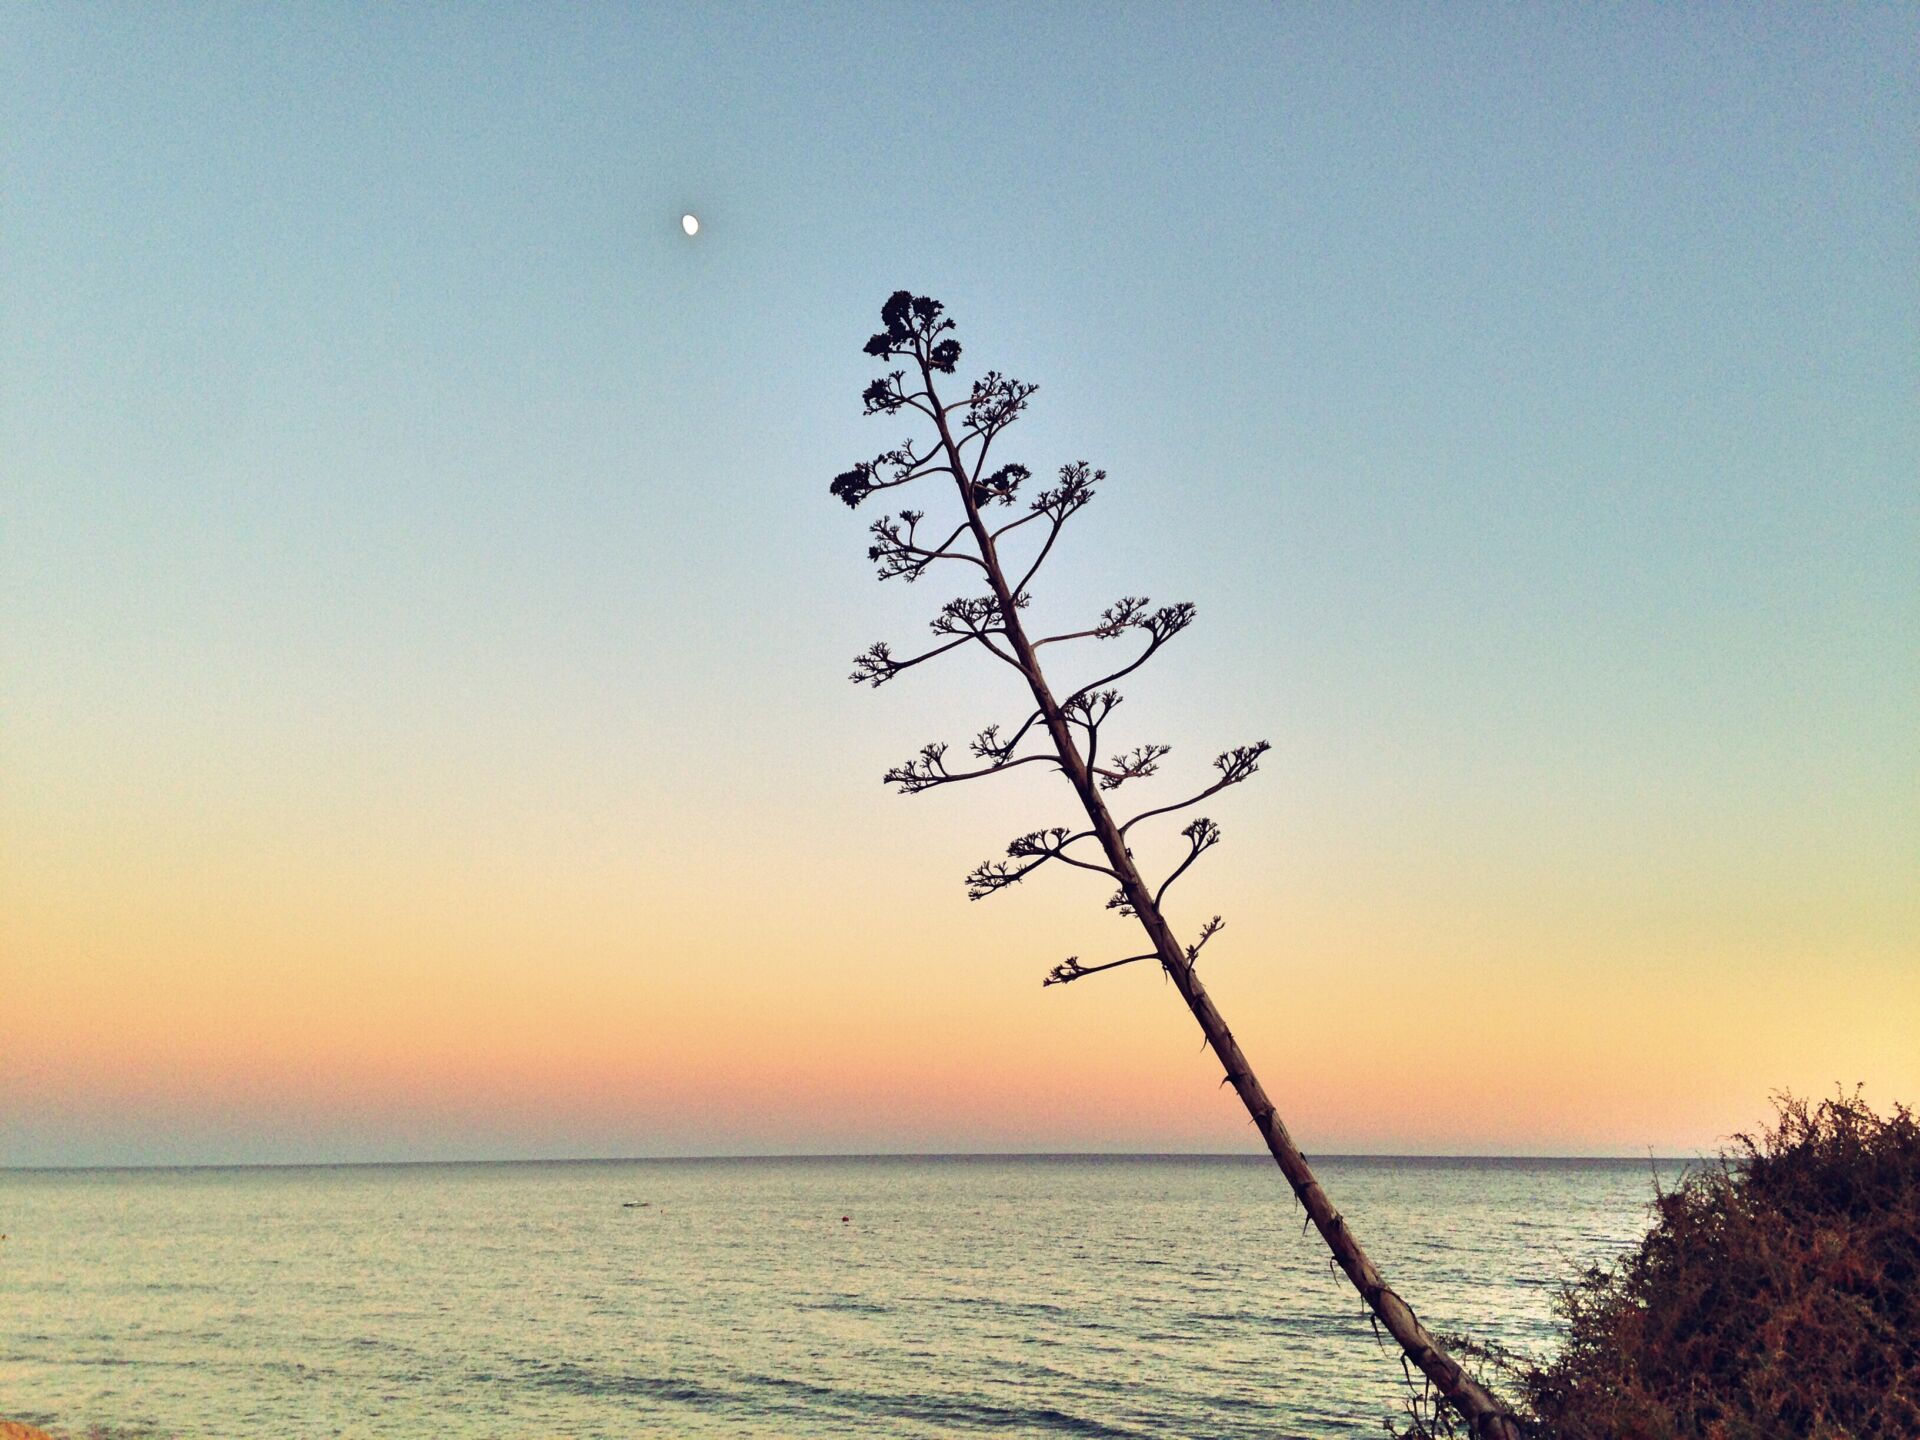 Algarve sunset